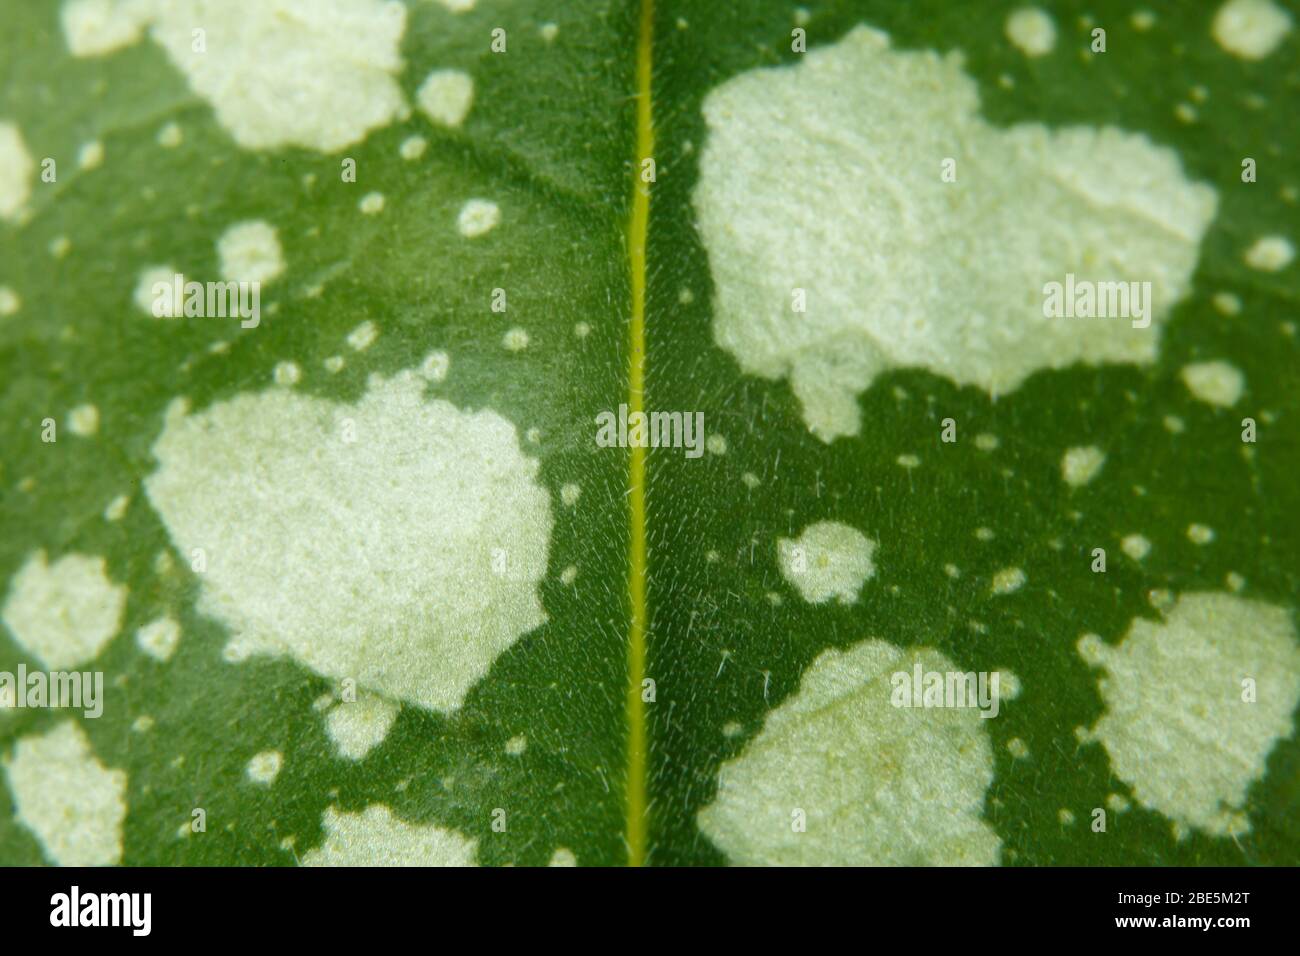 Spotted leaf of medunica pulmonaria Stock Photo